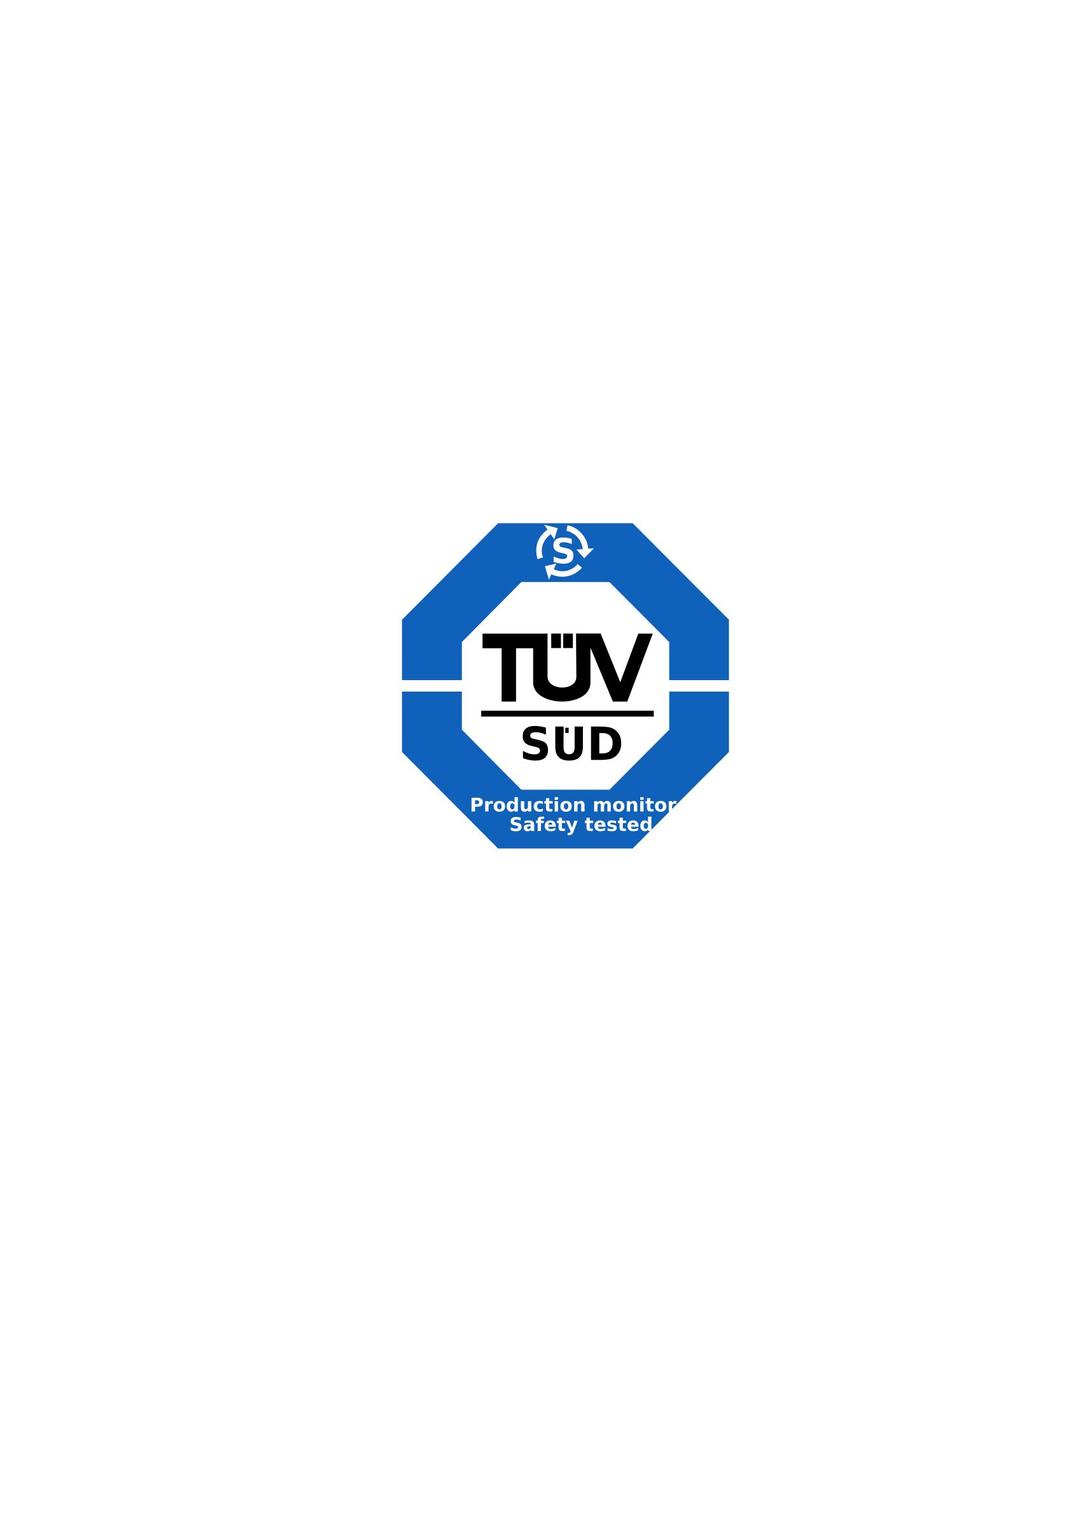 TUV SUD logo png transparent